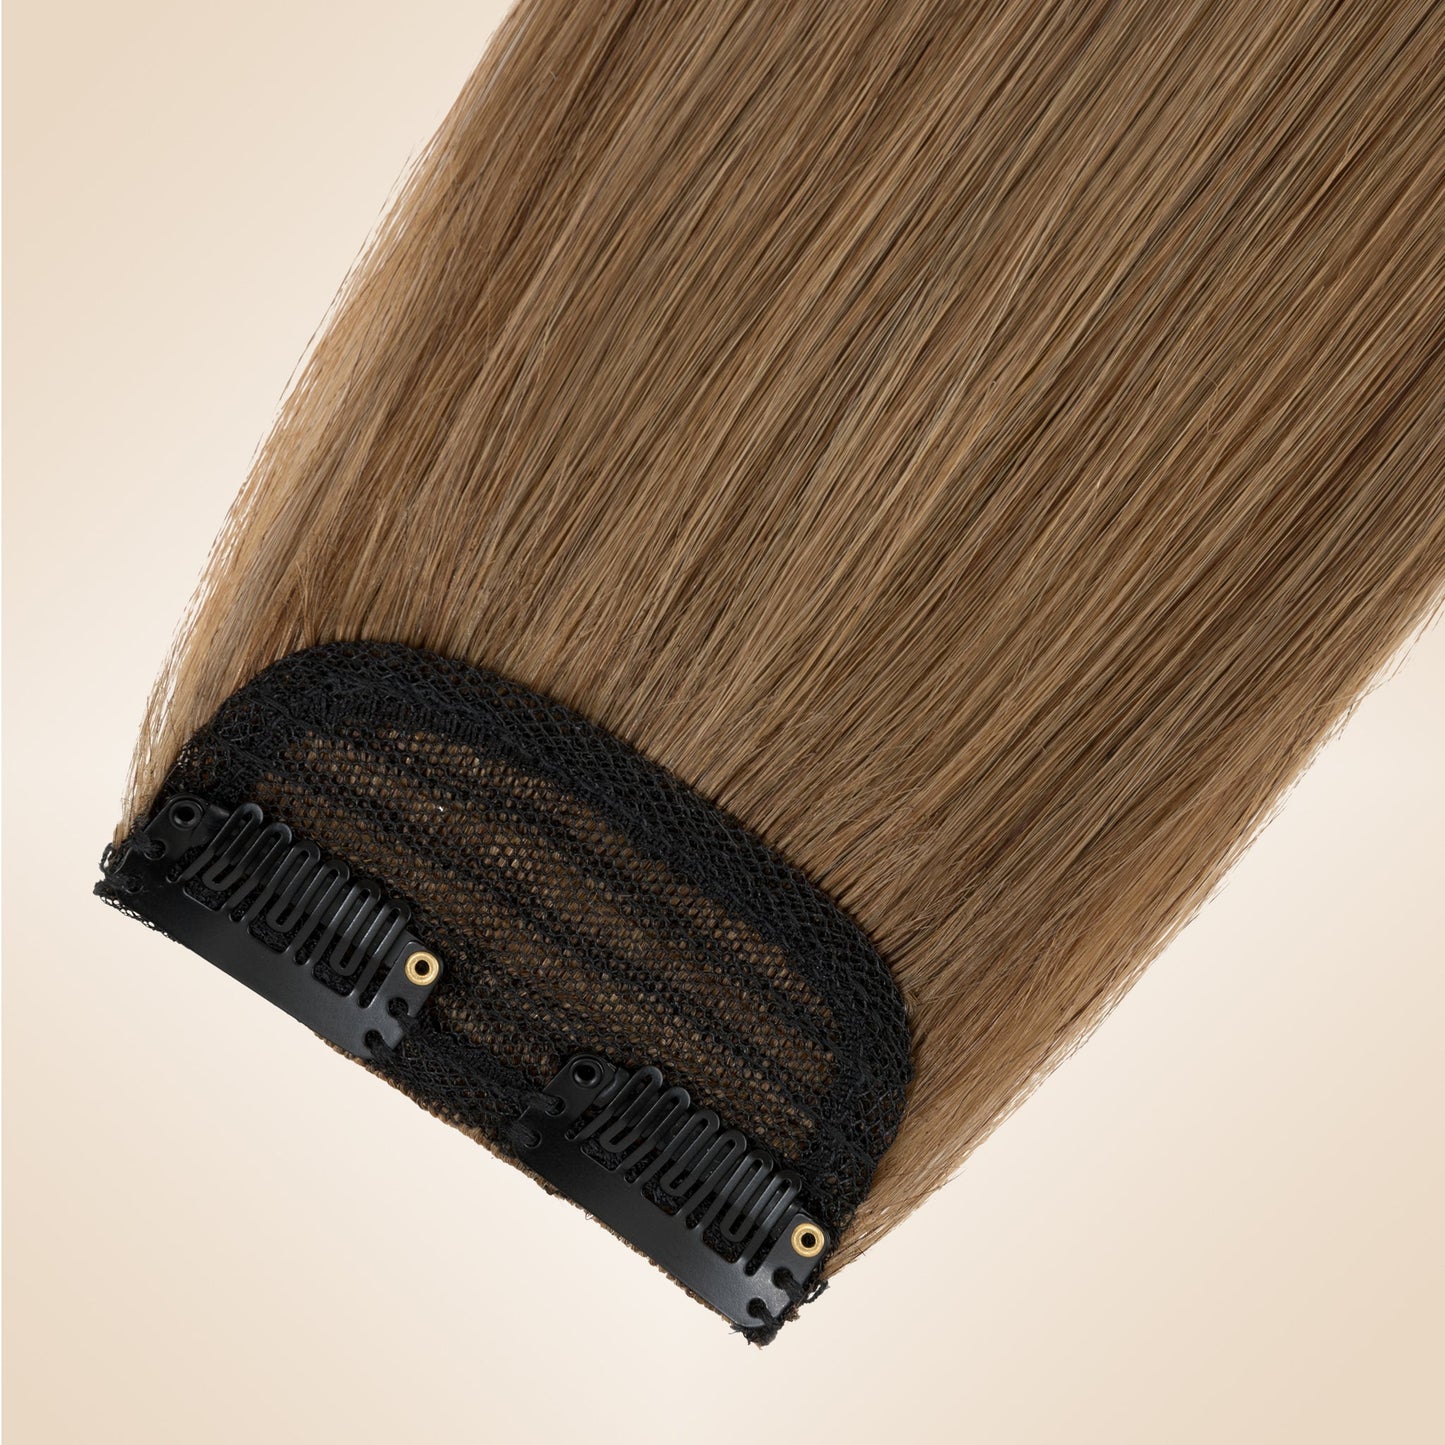 Light Brown Thinning Hair Fill-Ins segohair.com